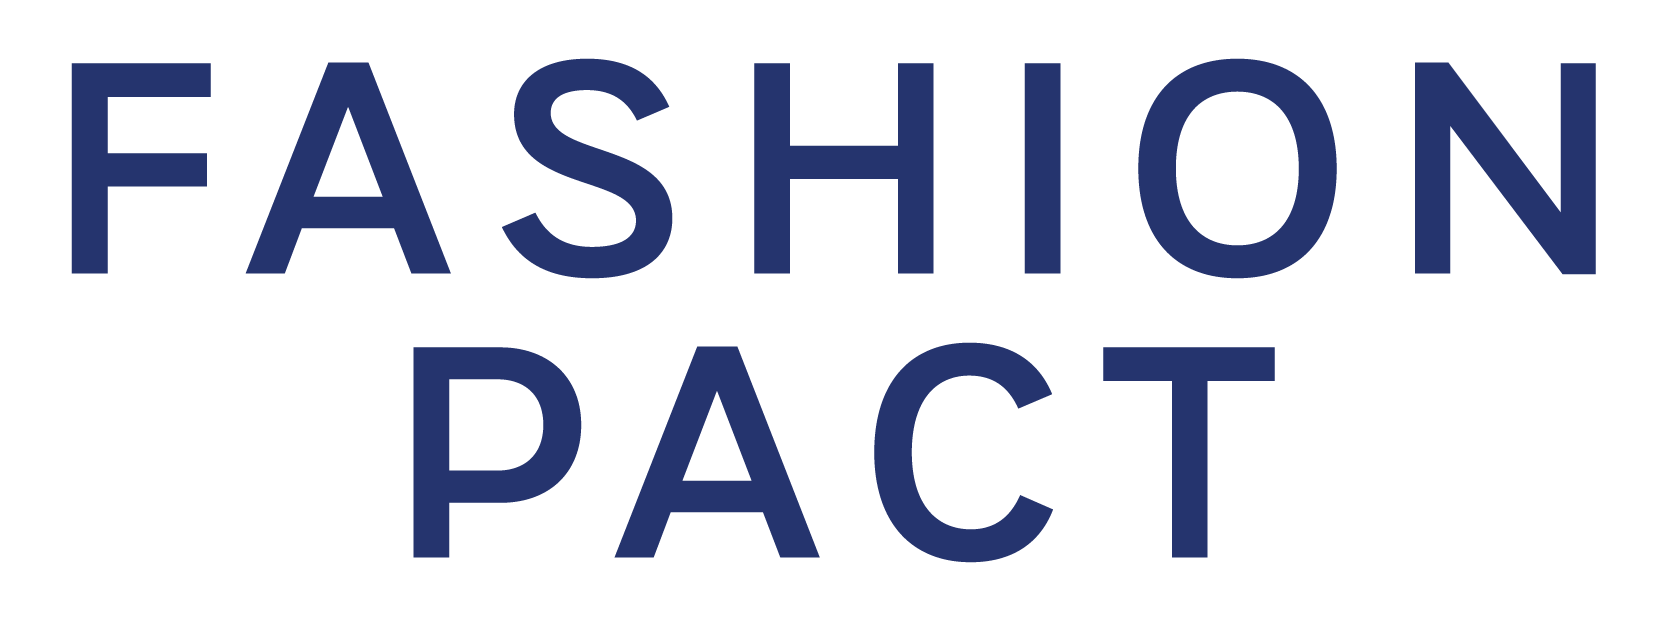 FashionPact-logo_Plan